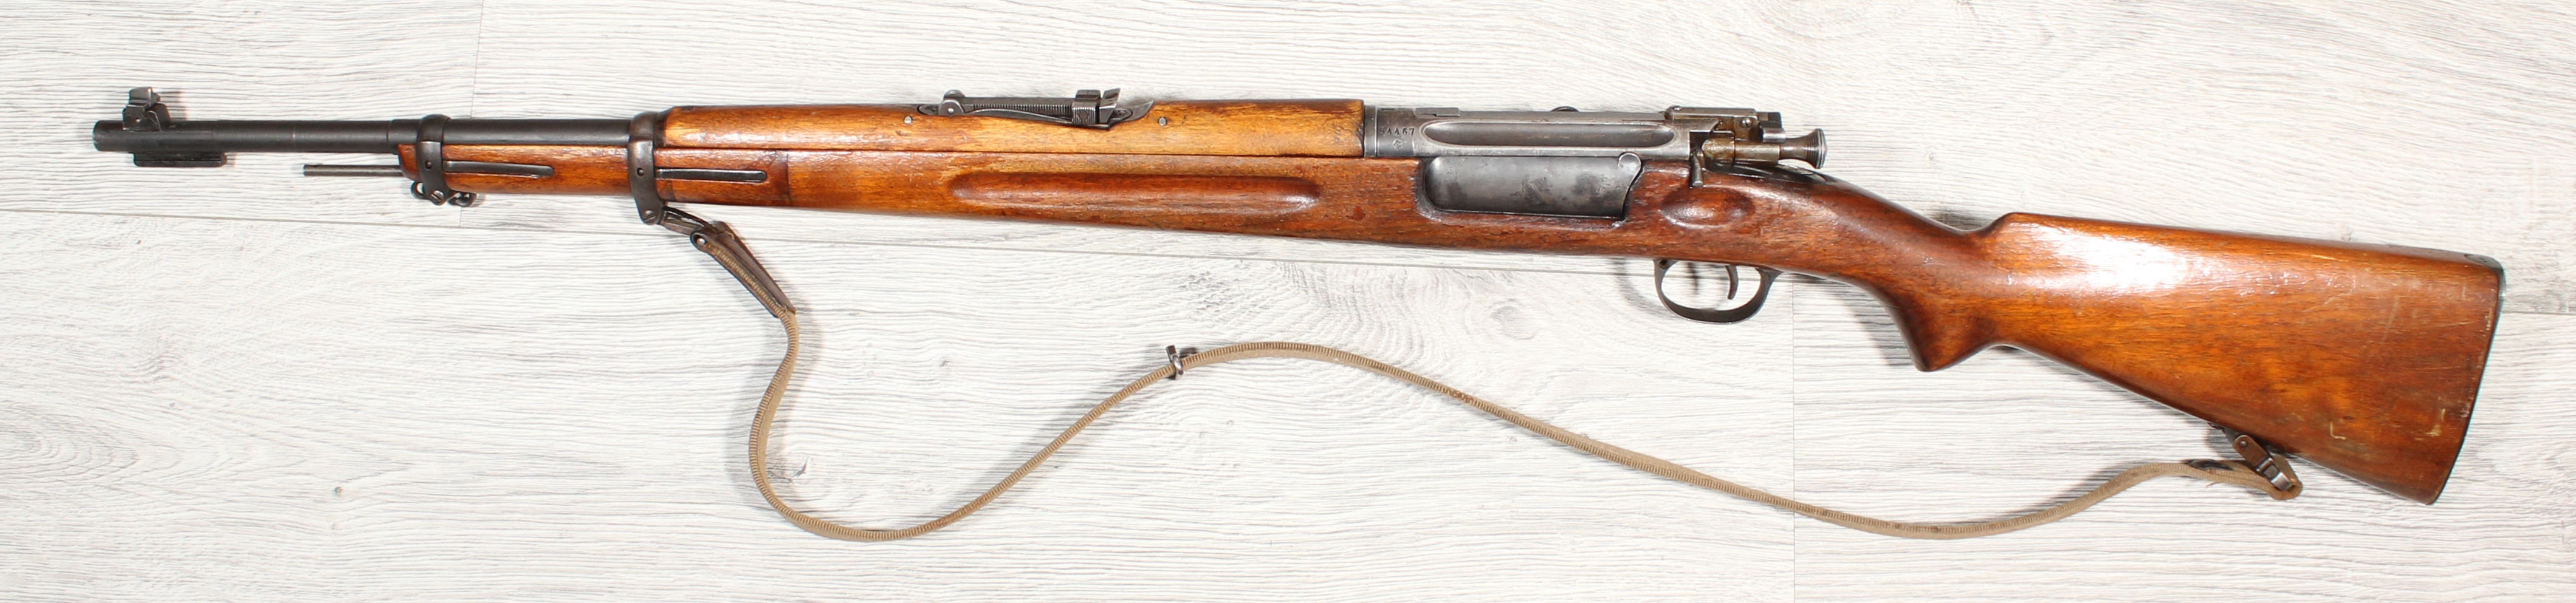 ./guns/rifle/bilder/Rifle-Kongsberg-Krag-M1894-Stomperud-54467-2.JPG